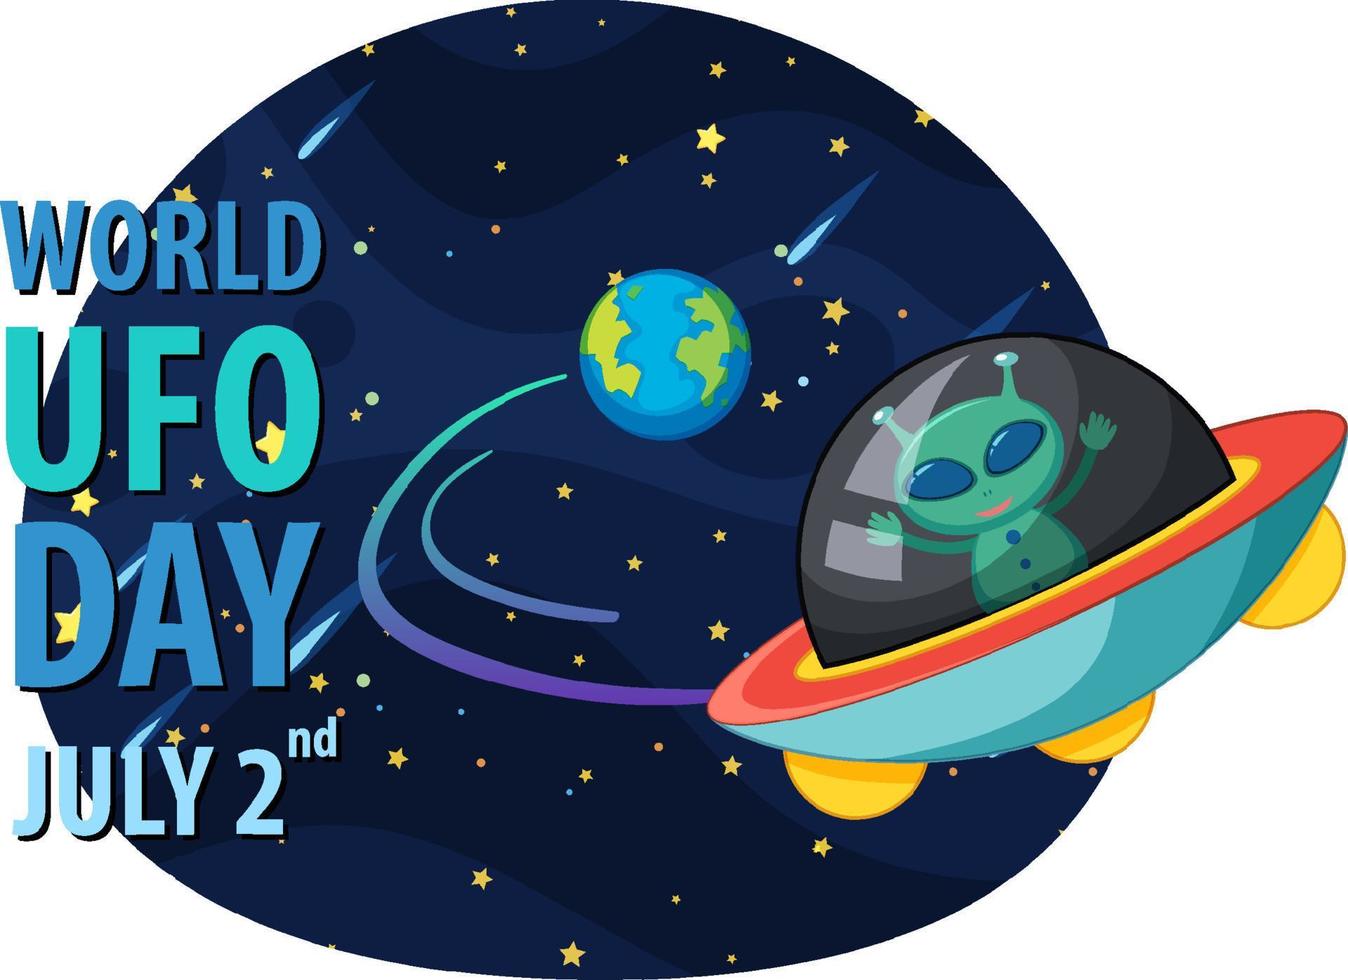 World UFO Day Poster Design vector